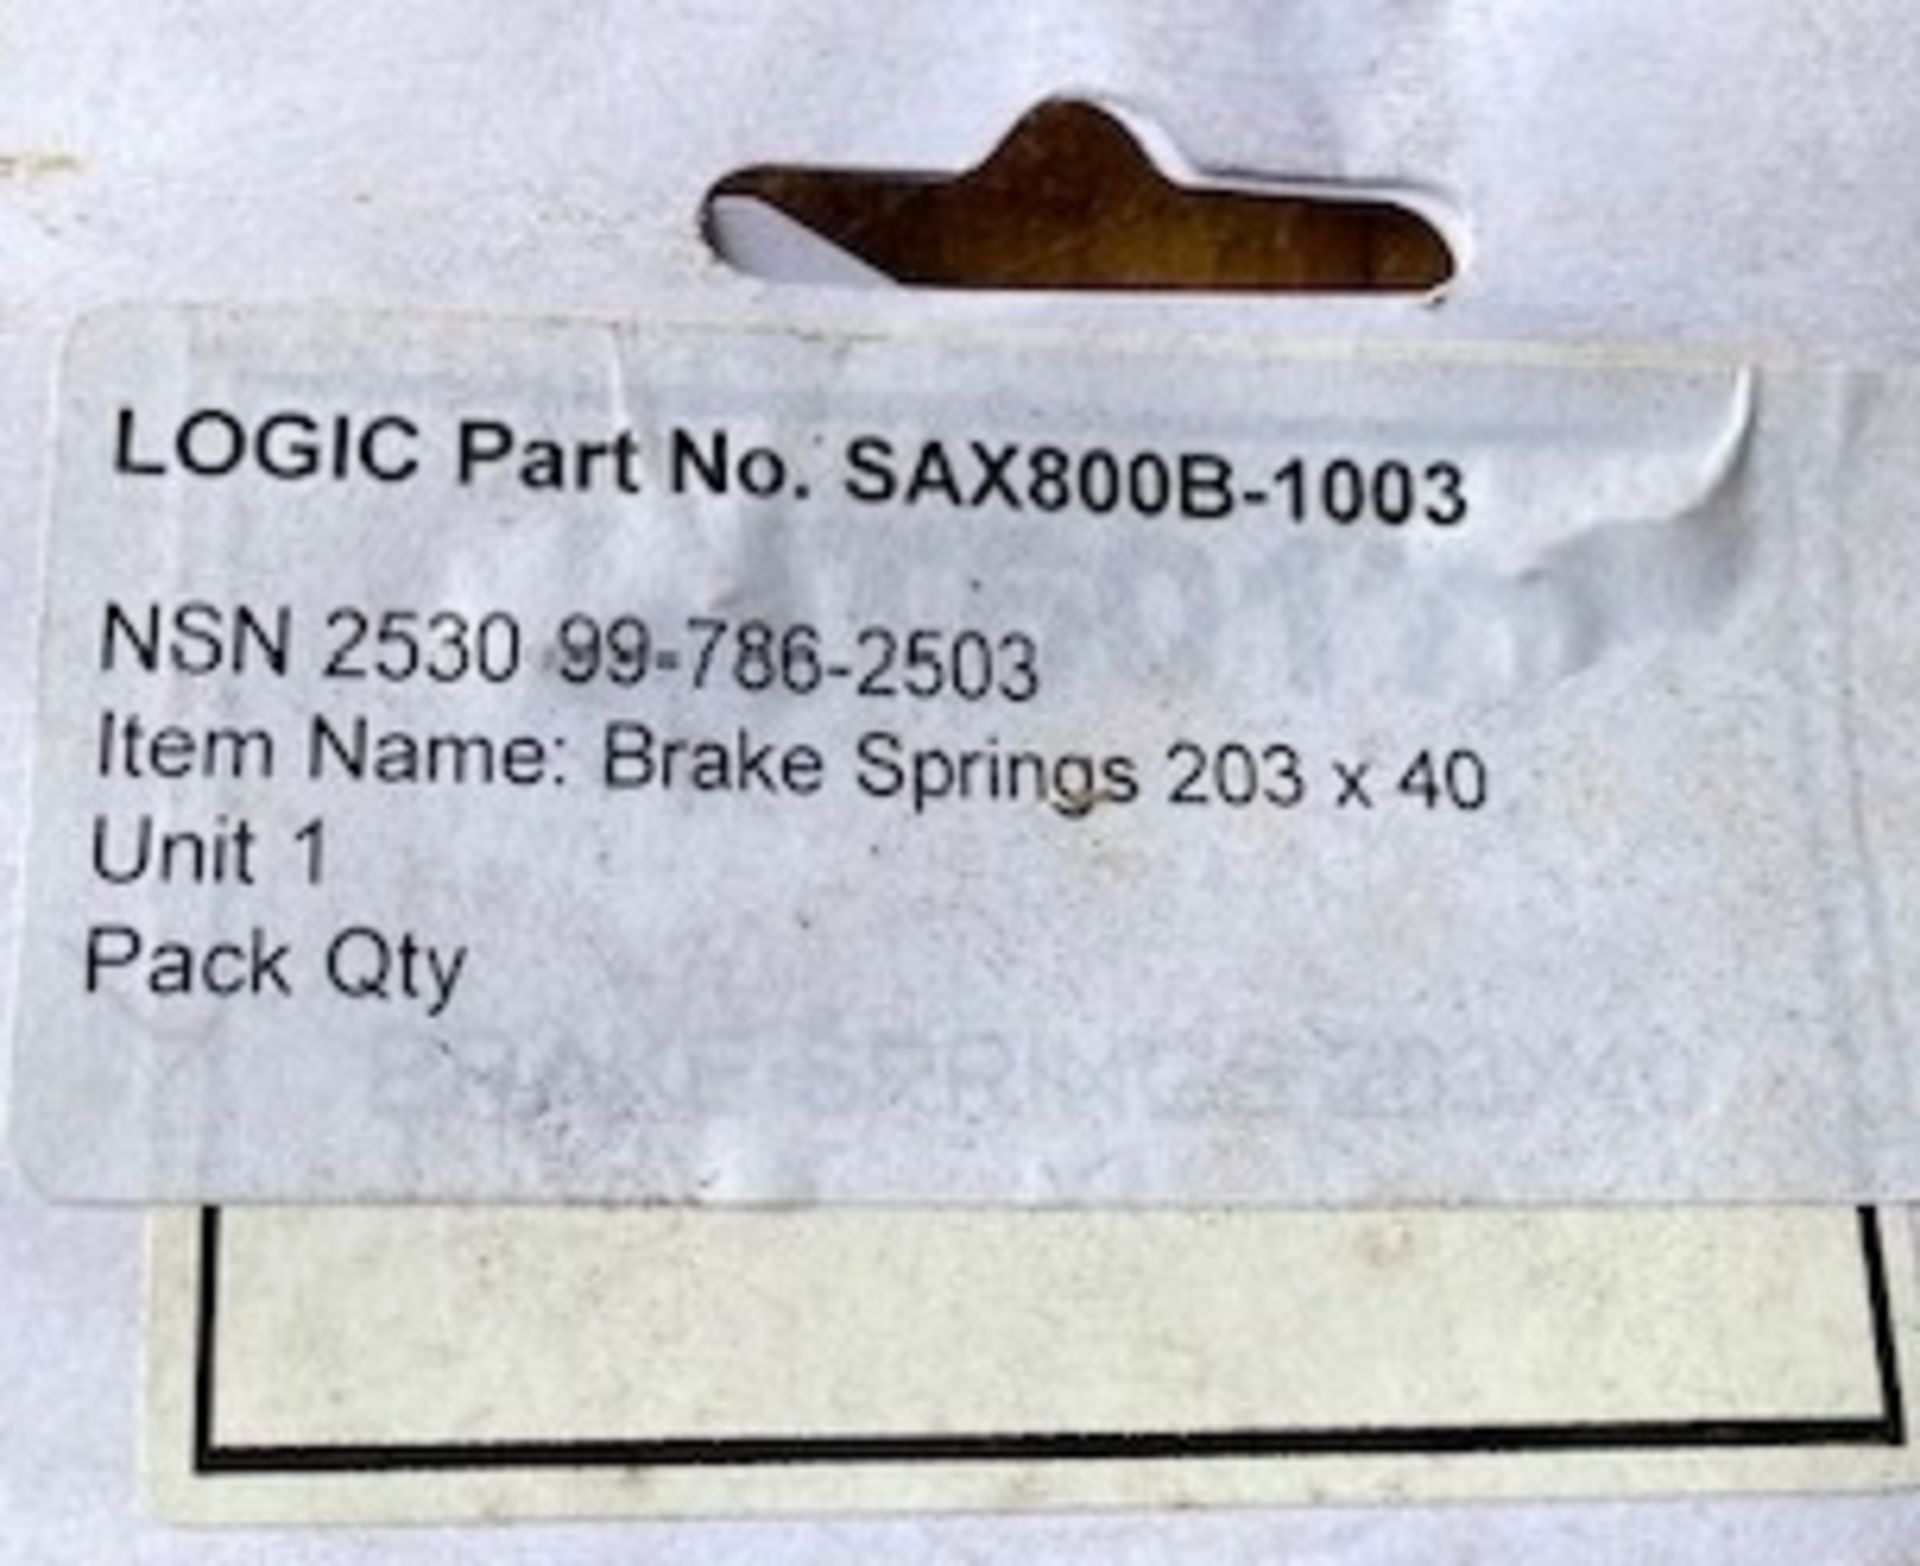 QTY 50 (10 Small Packs x 5) Brake Springs Kit - Image 2 of 6